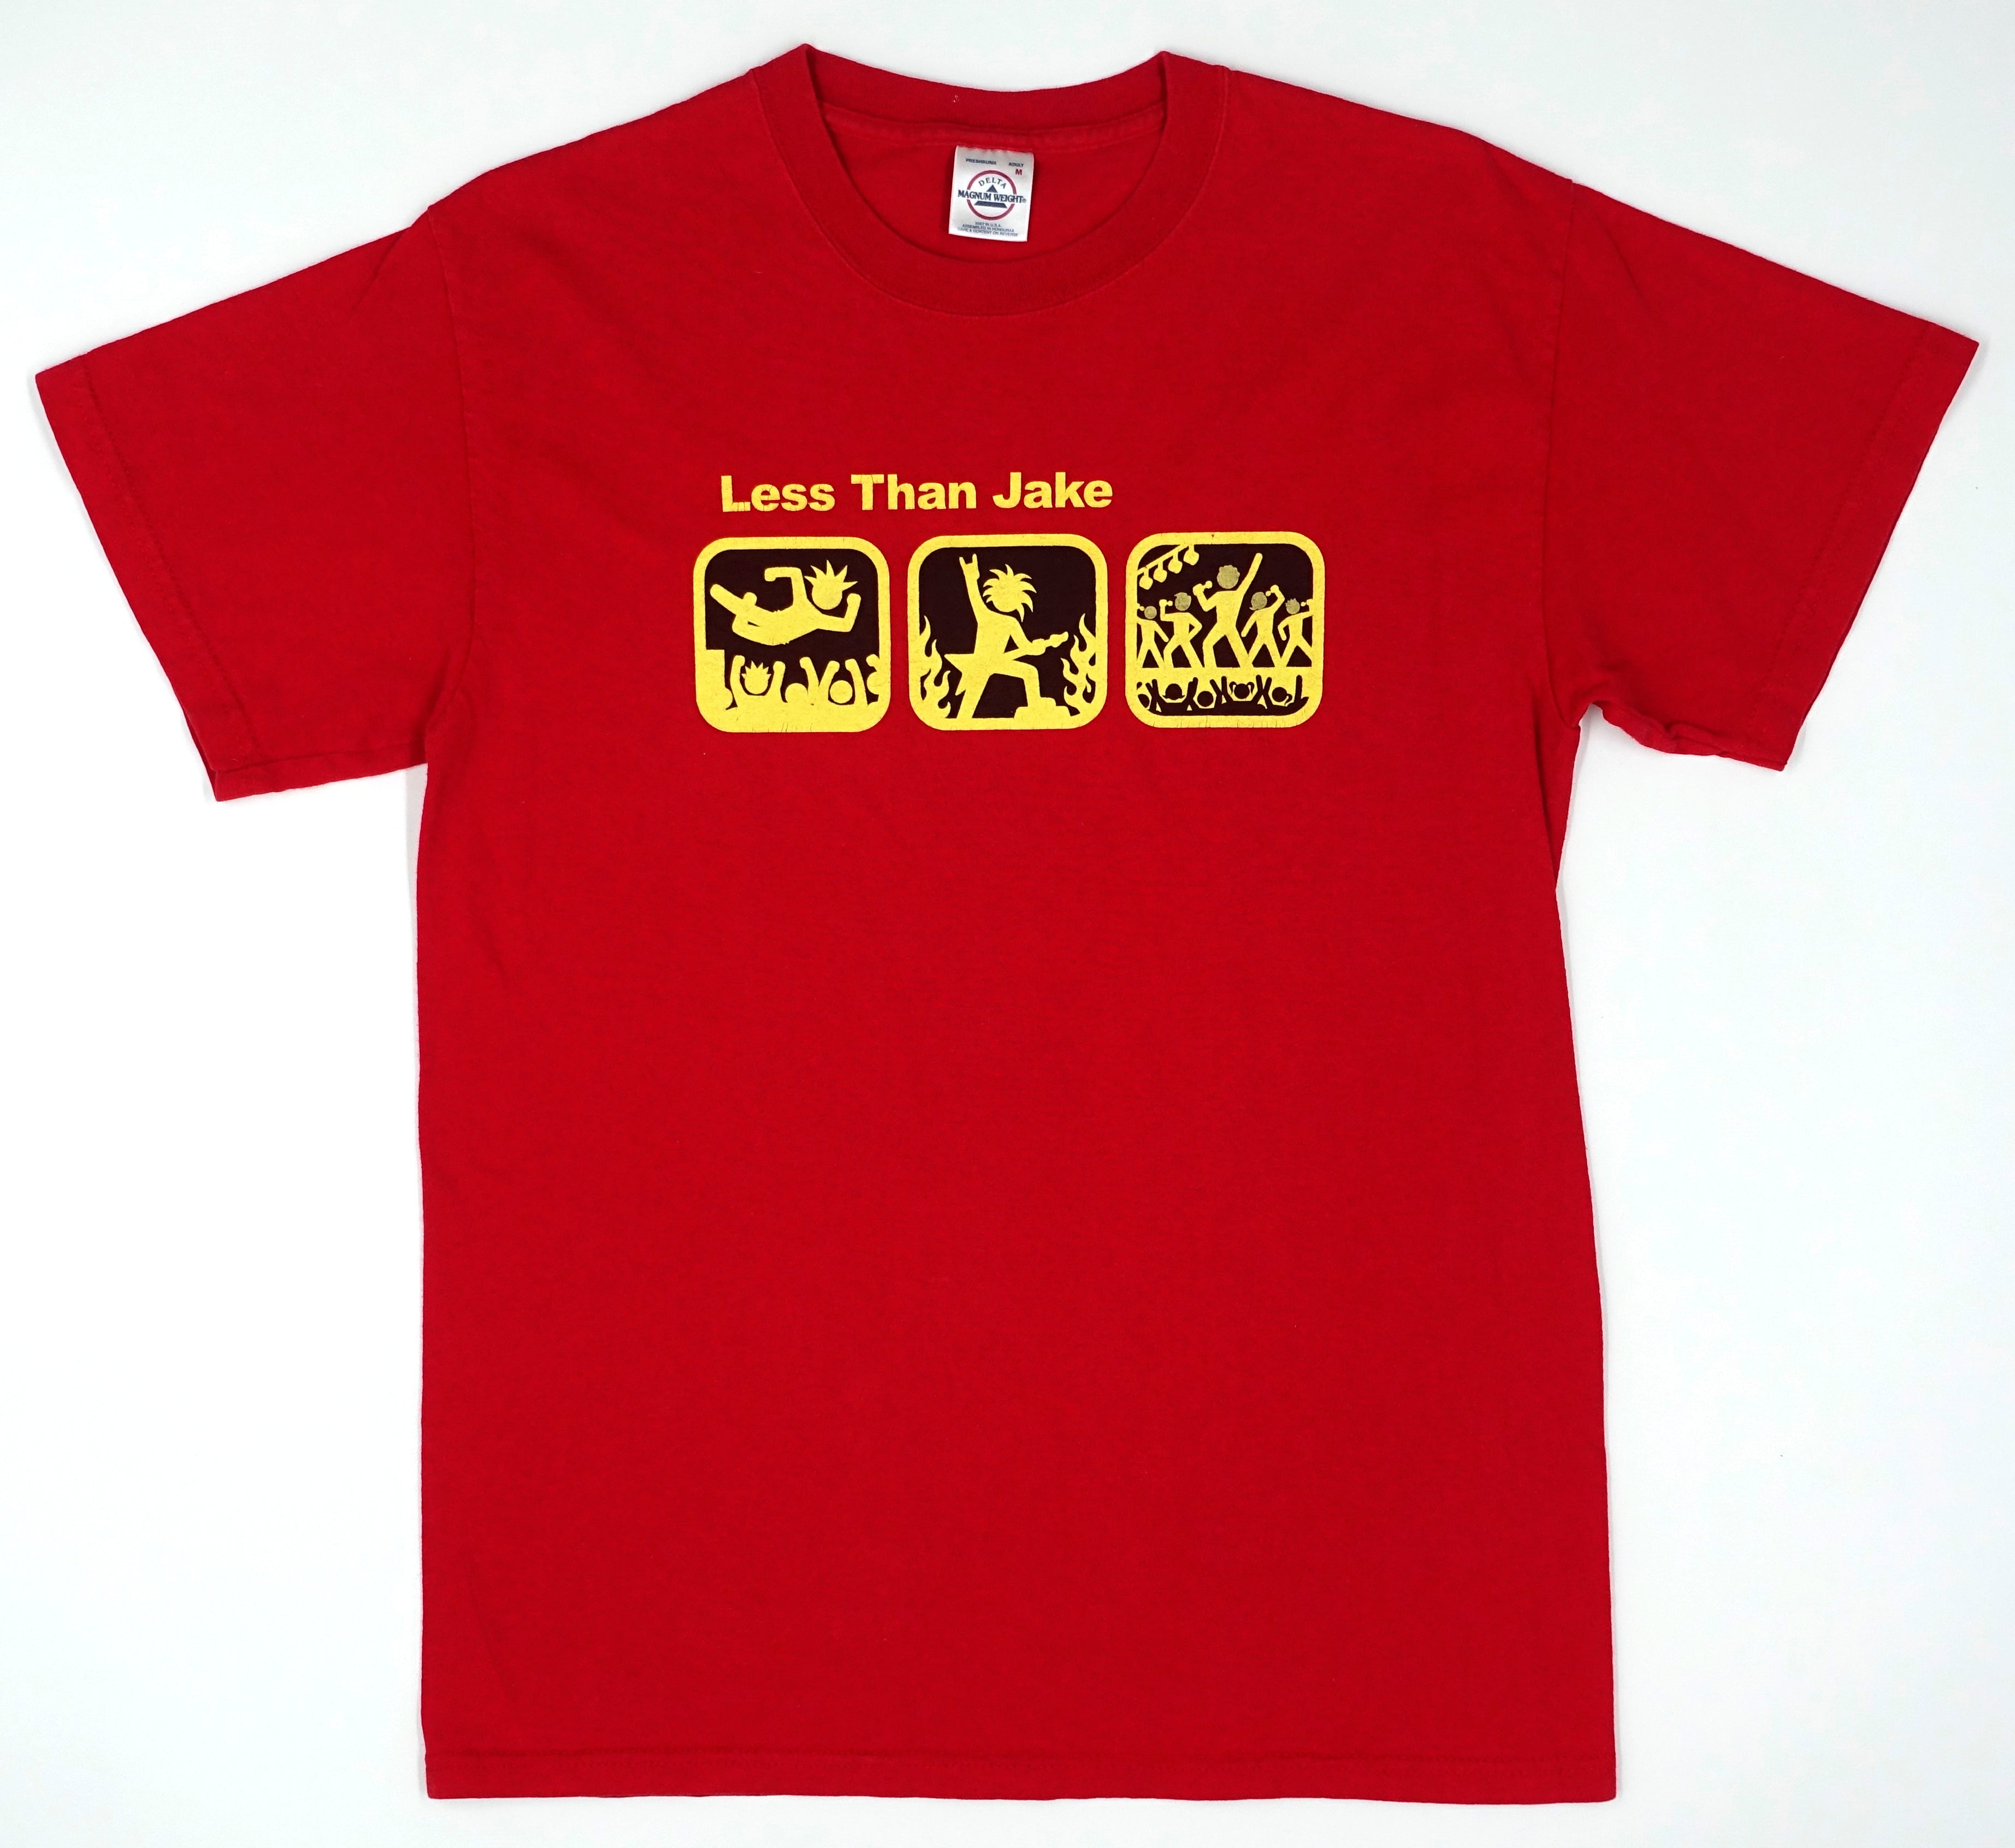 Less Than Jake - Pop, Punk, Metal 90's Tour Shirt Size Medium